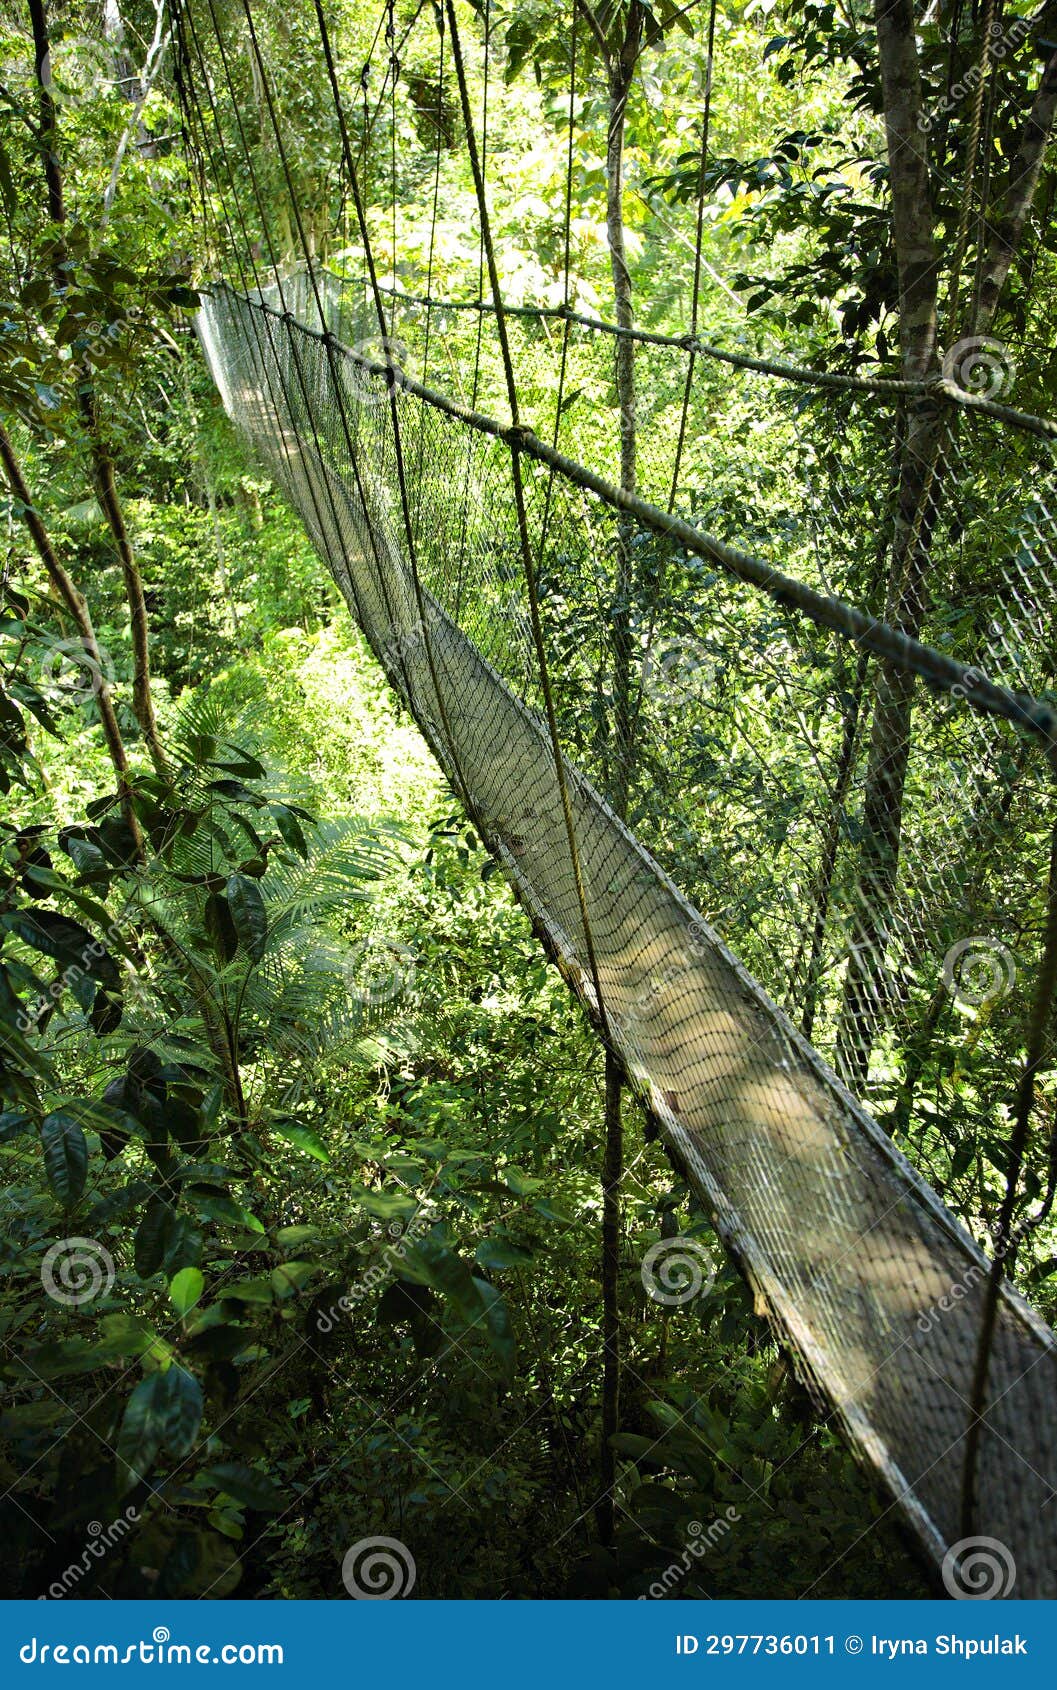 hanging bridge, atlantic rainforest, mata atlantica, bahia, brazil, south america